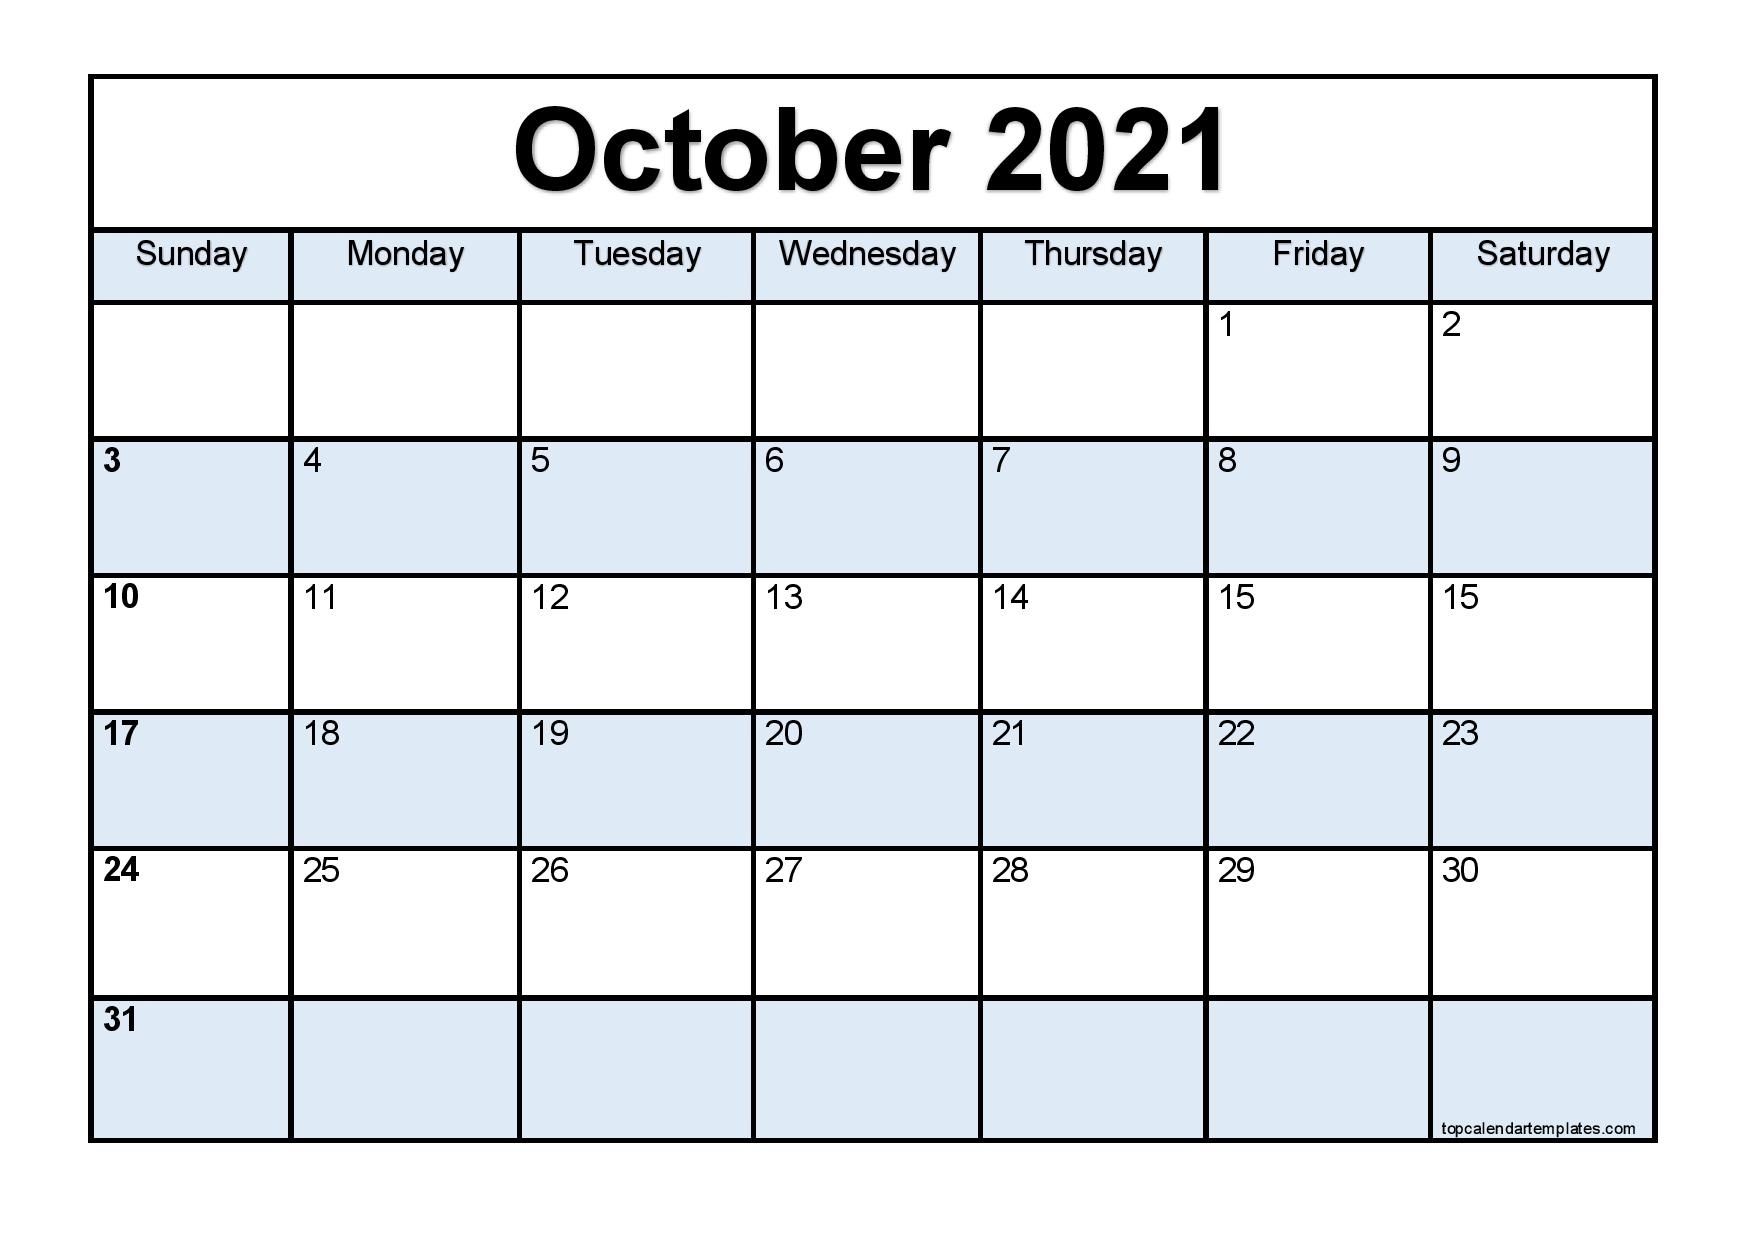 Free October 2021 Printable Calendar - Monthly Templates Print A Calendar October 2021